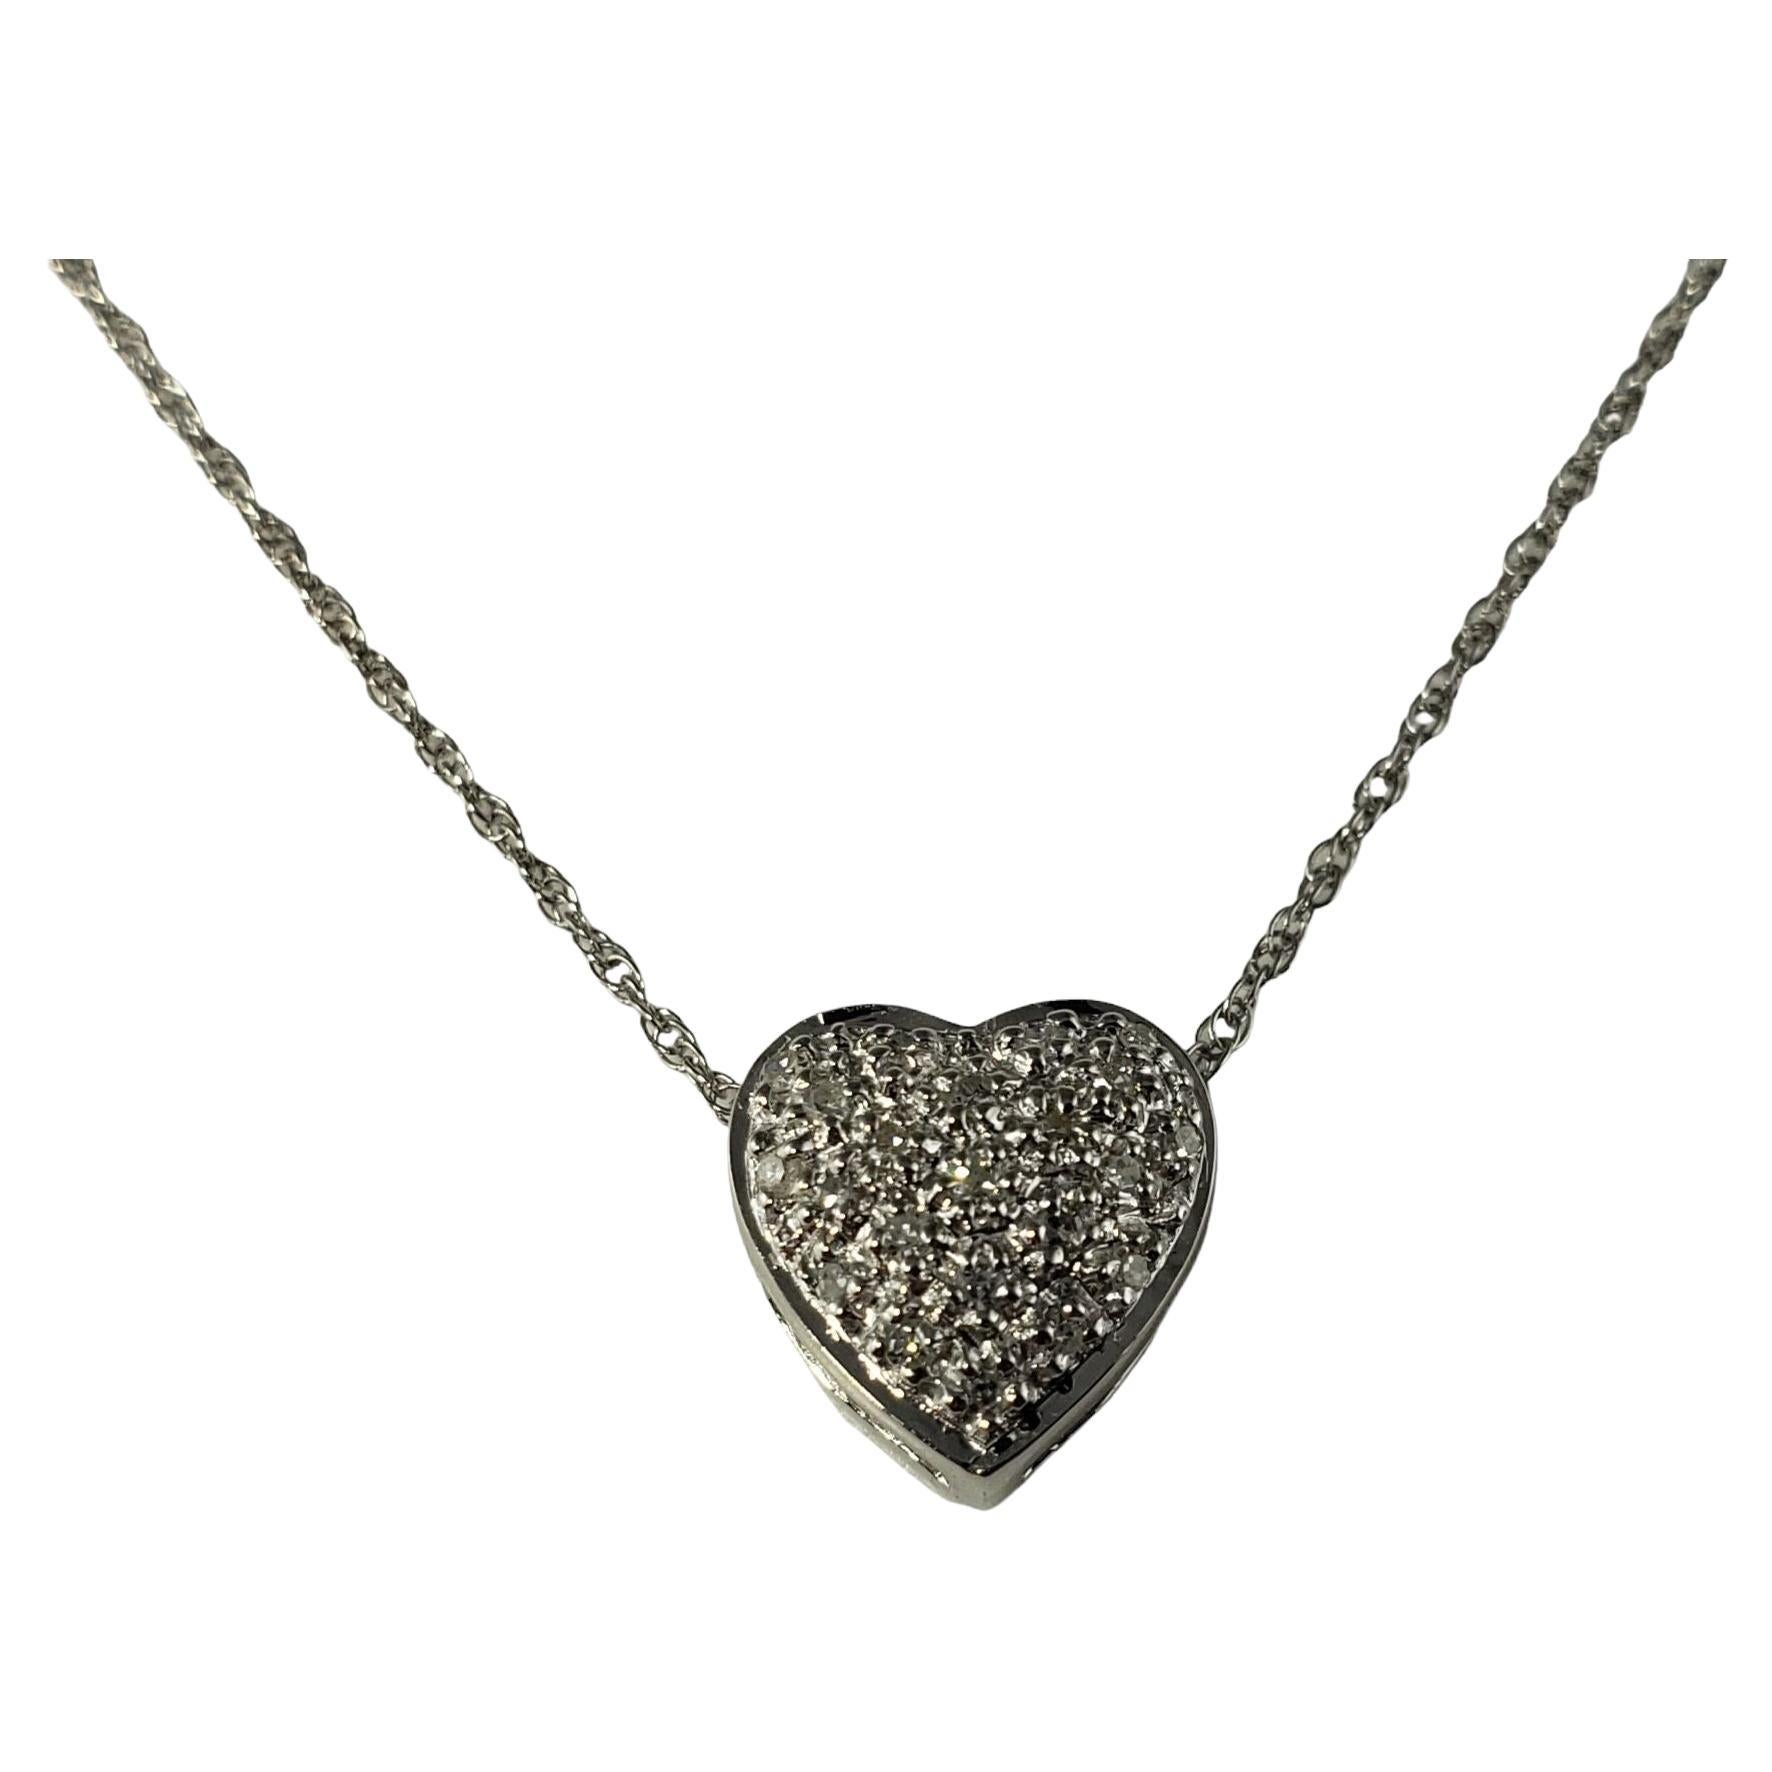 Vintage 14 Karat White Gold Diamond Heart Pendant Necklace #14916 For Sale